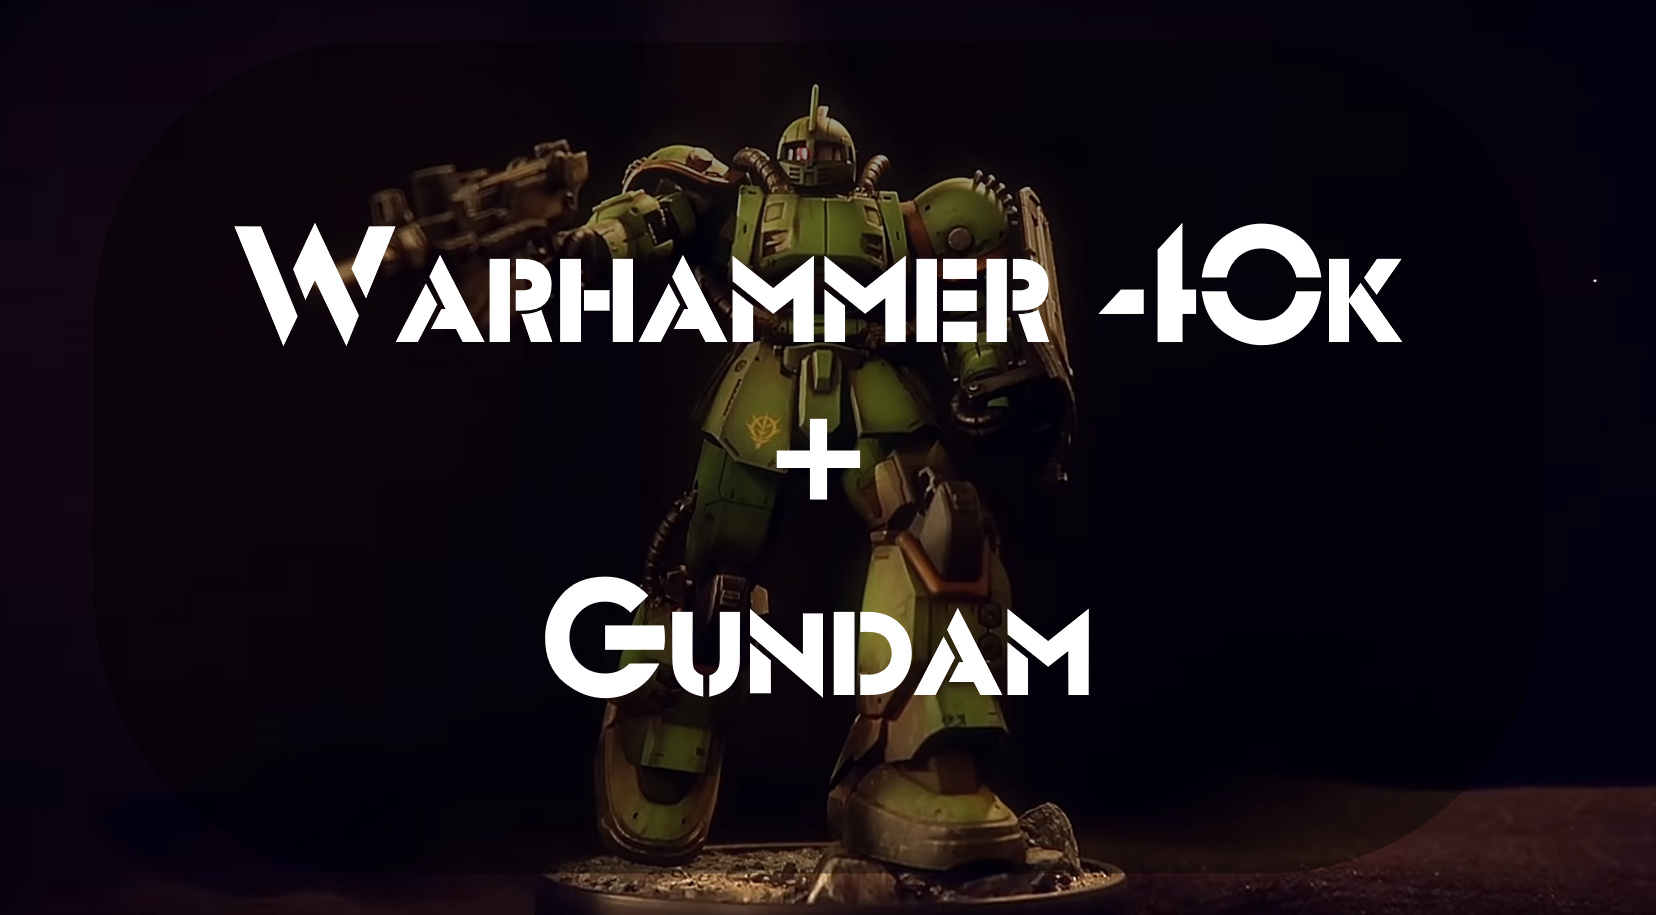 Warhammer 40k + Gundam